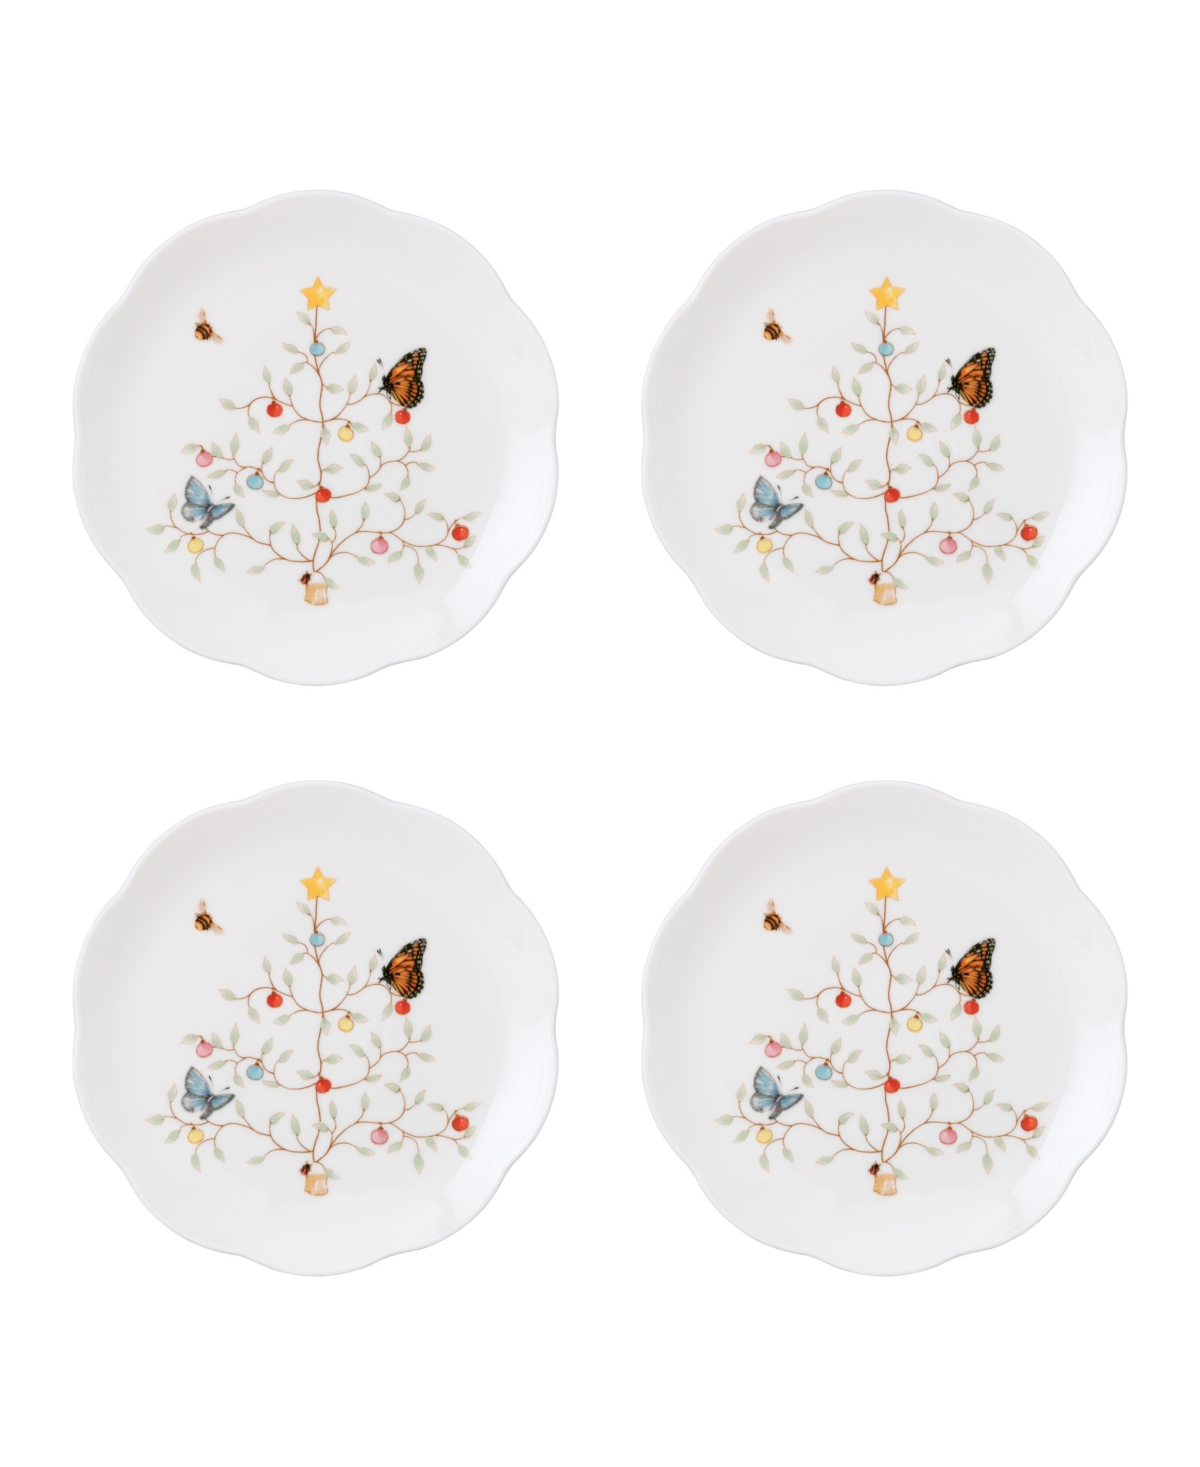 Butterfly Meadow Seasonal Dessert Plate Set, 4 Piece - Multi and White